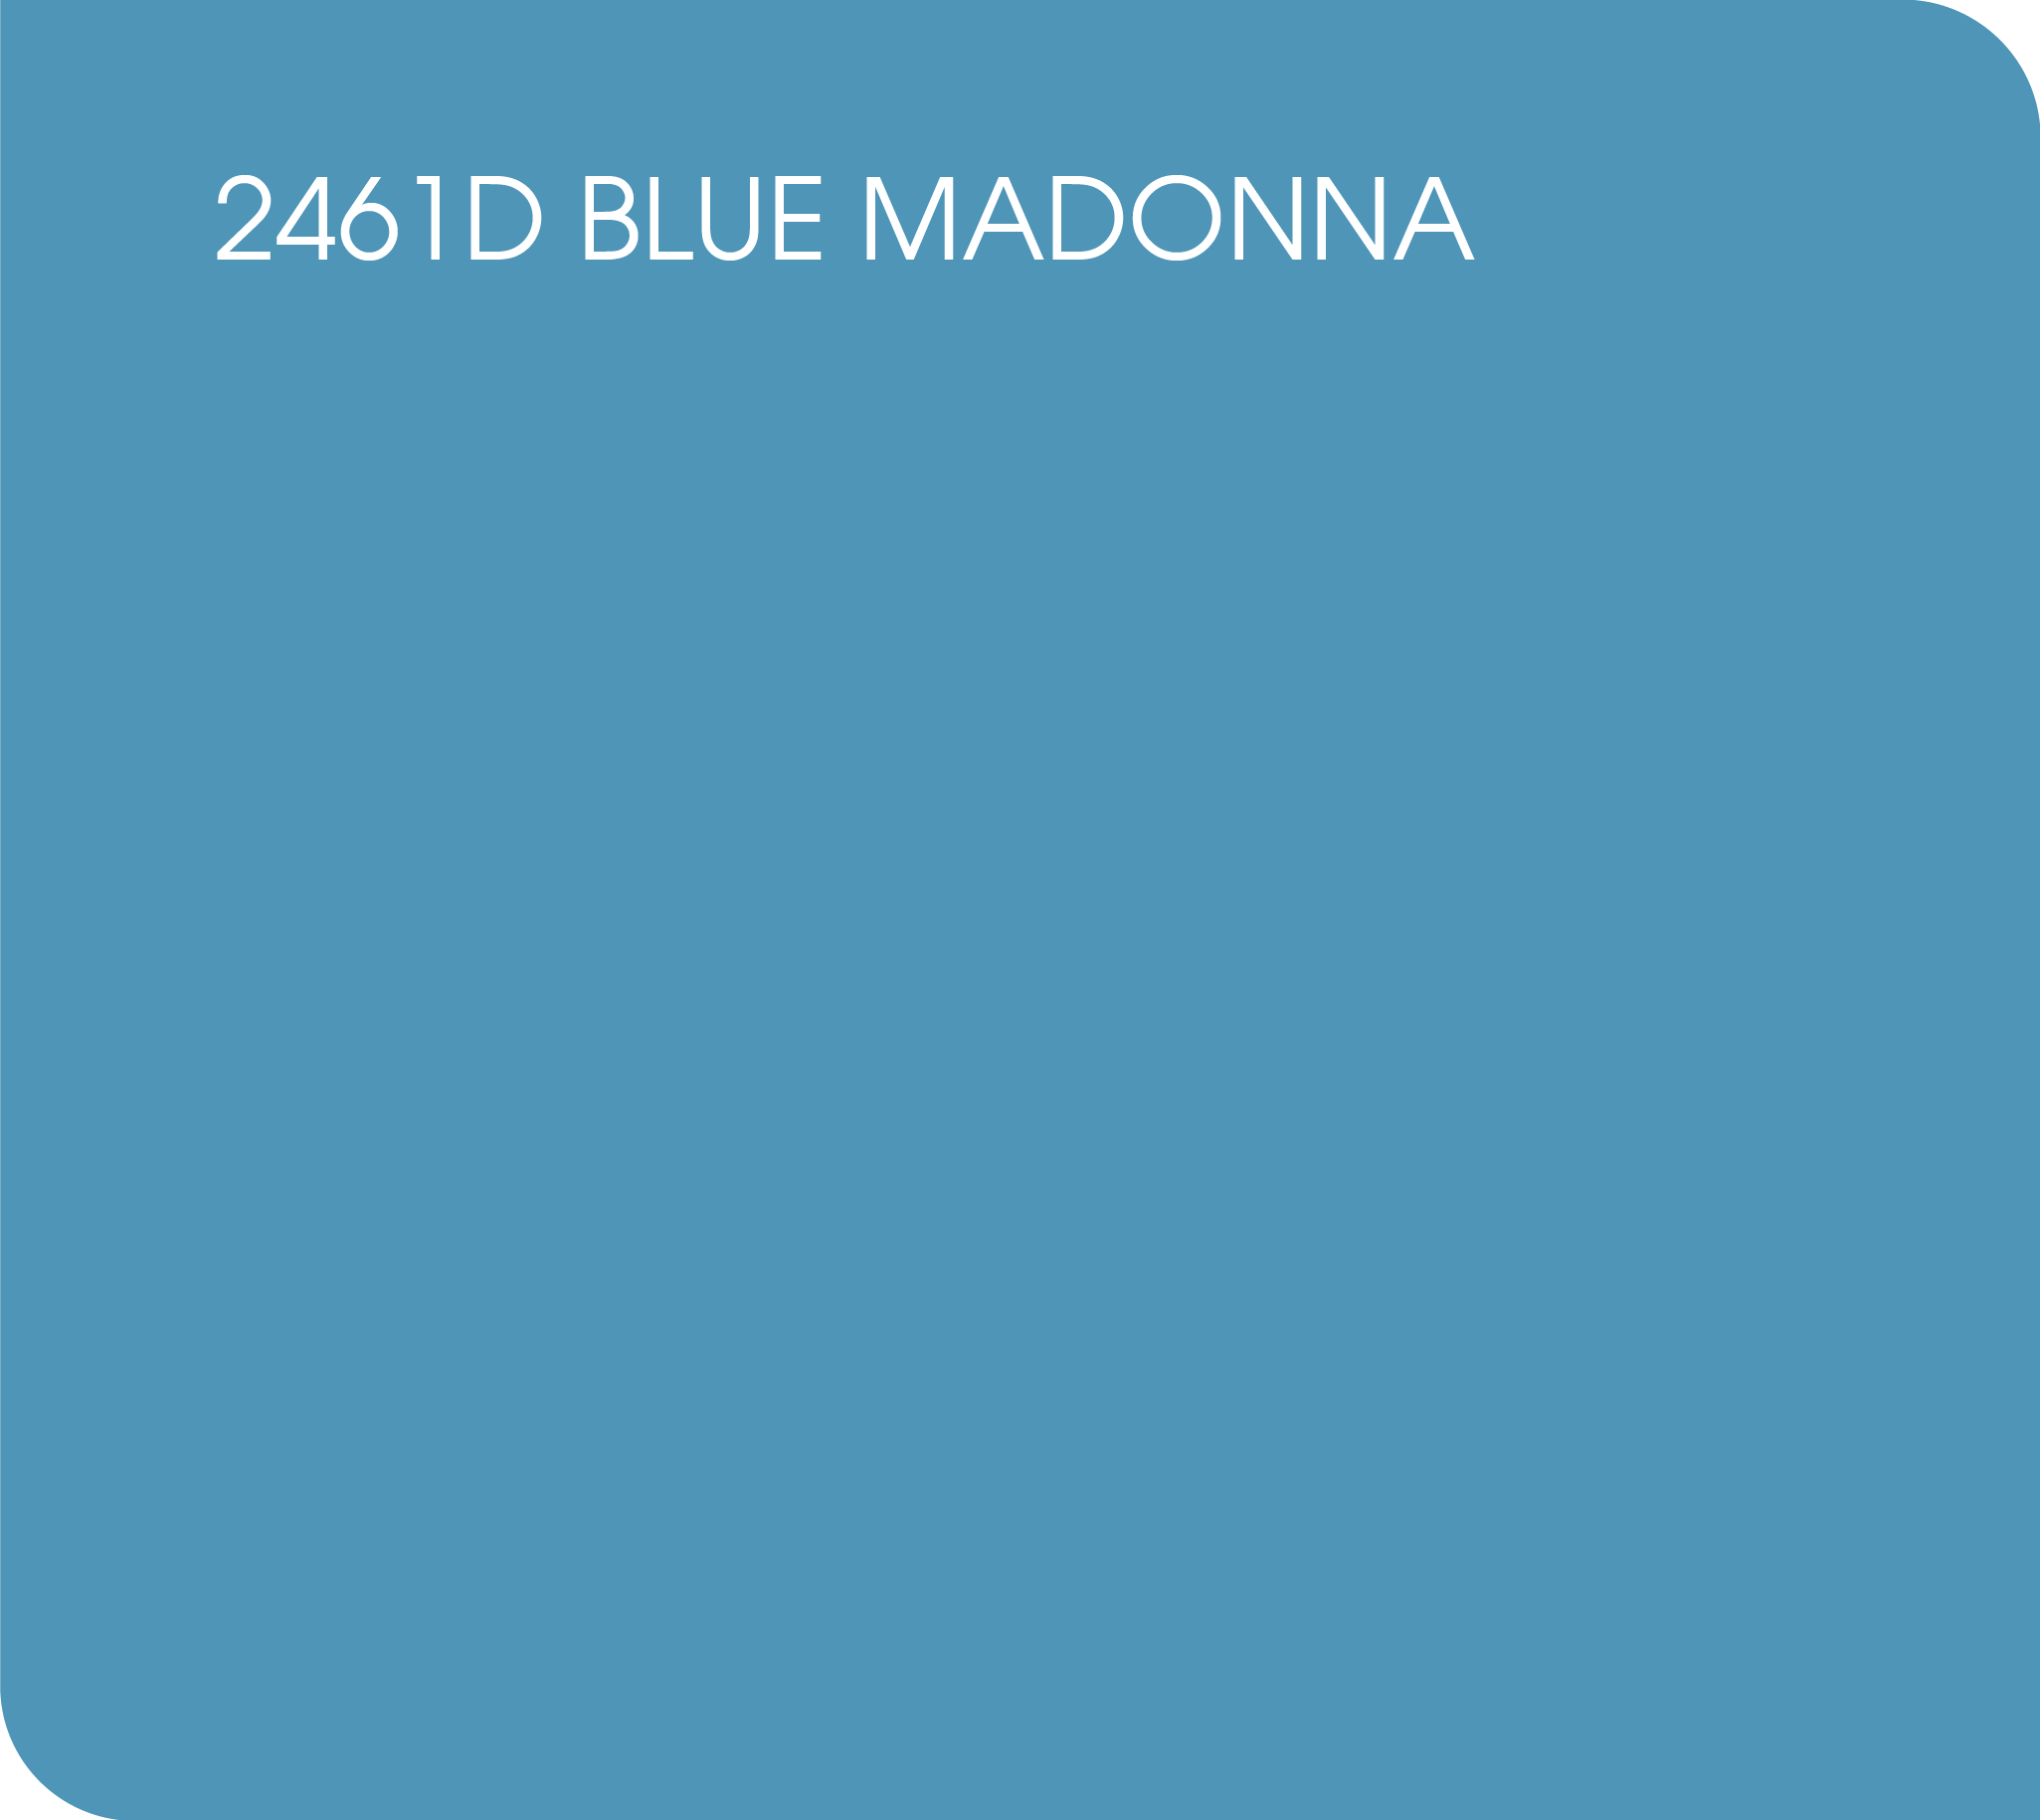 2461D blue madonna